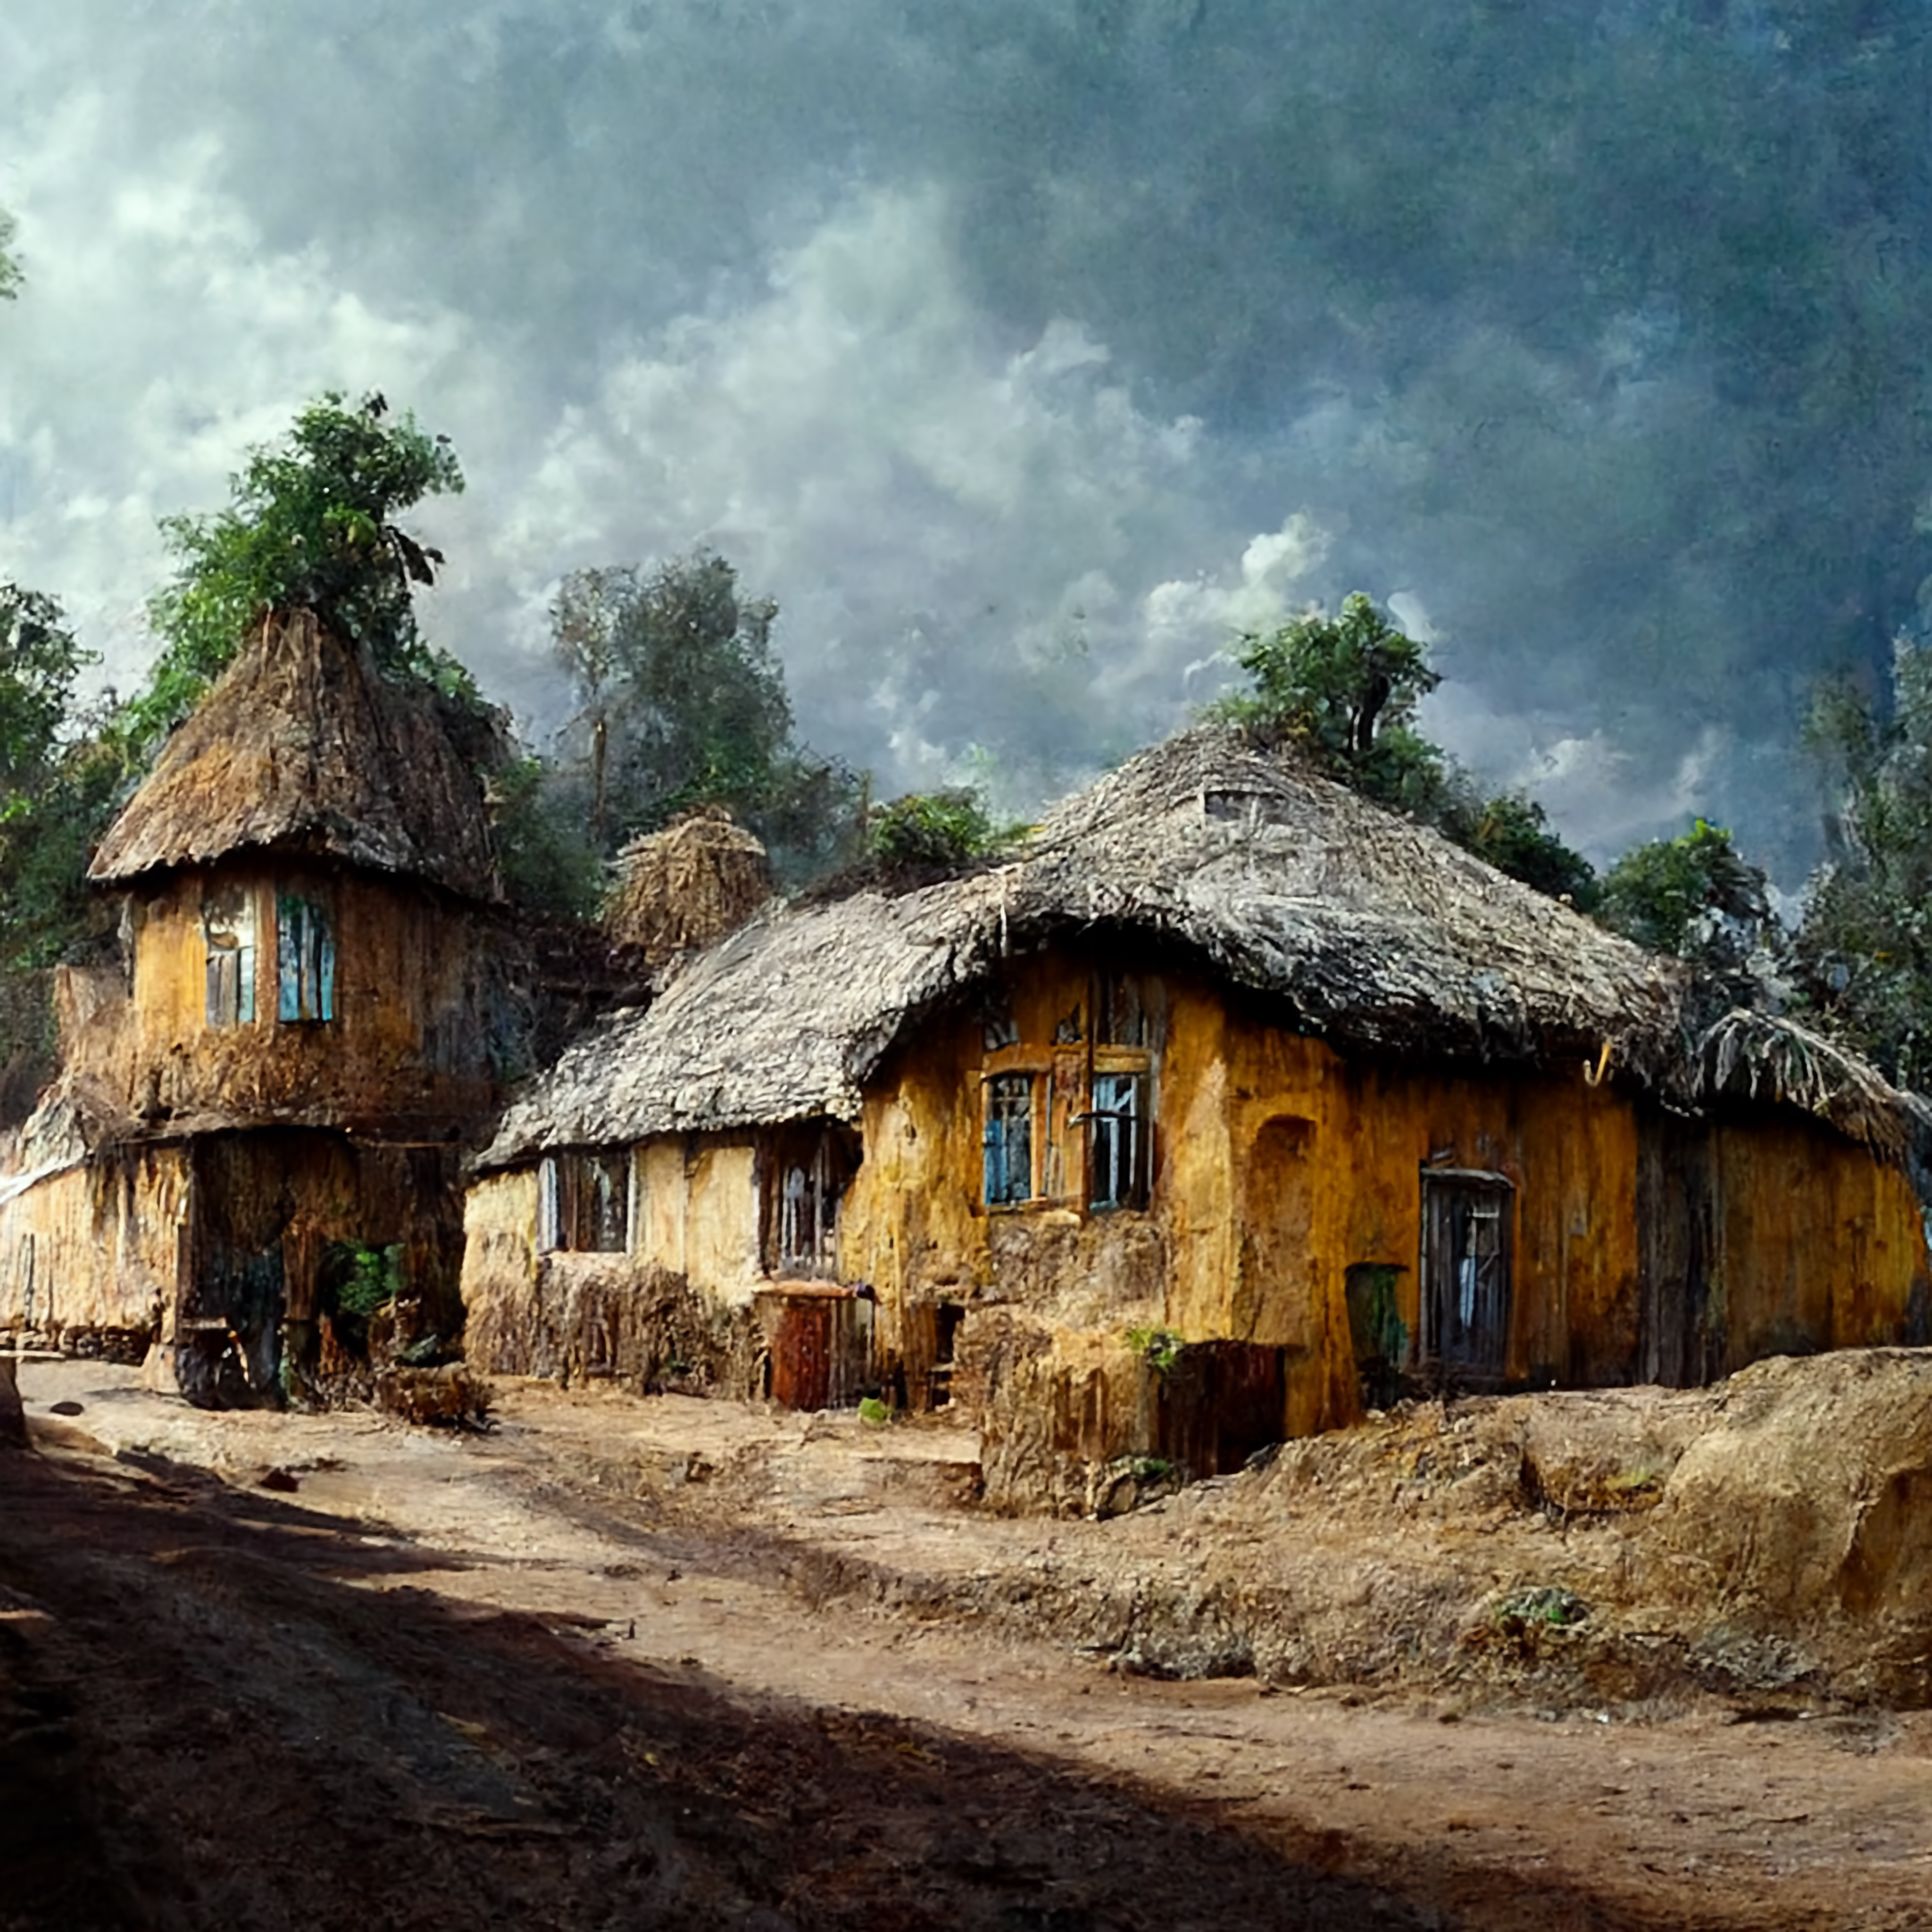 Fula Village 2/3 by Digitonaut on DeviantArt